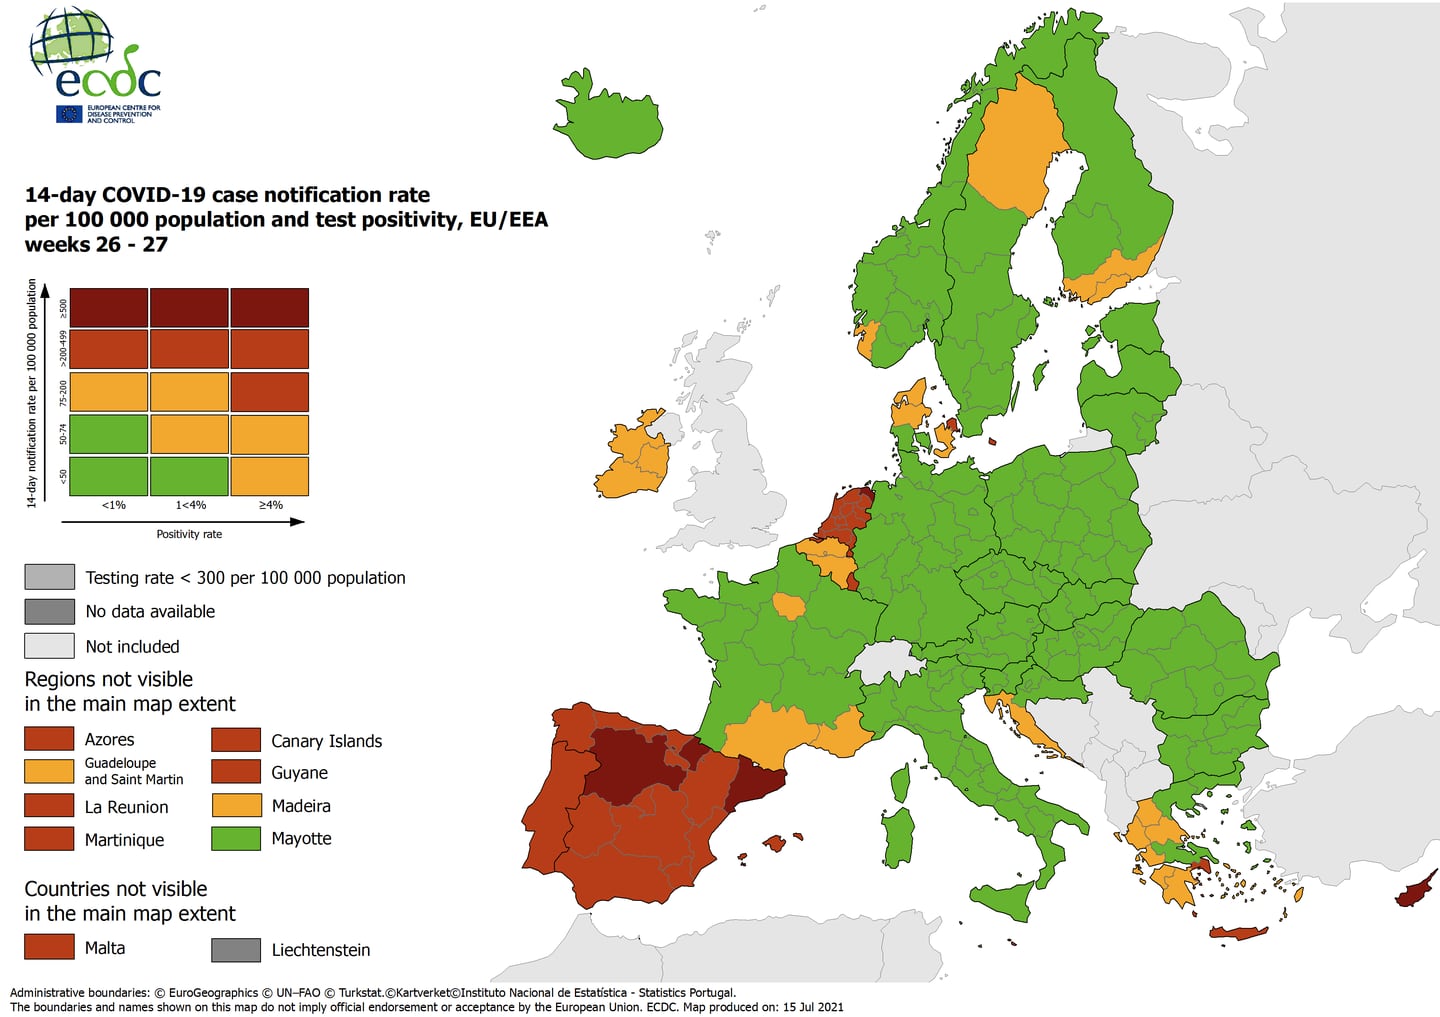 Kart over europa. Oversikt over hvilke land som er grønne, oransje, røde og mørkerøde.